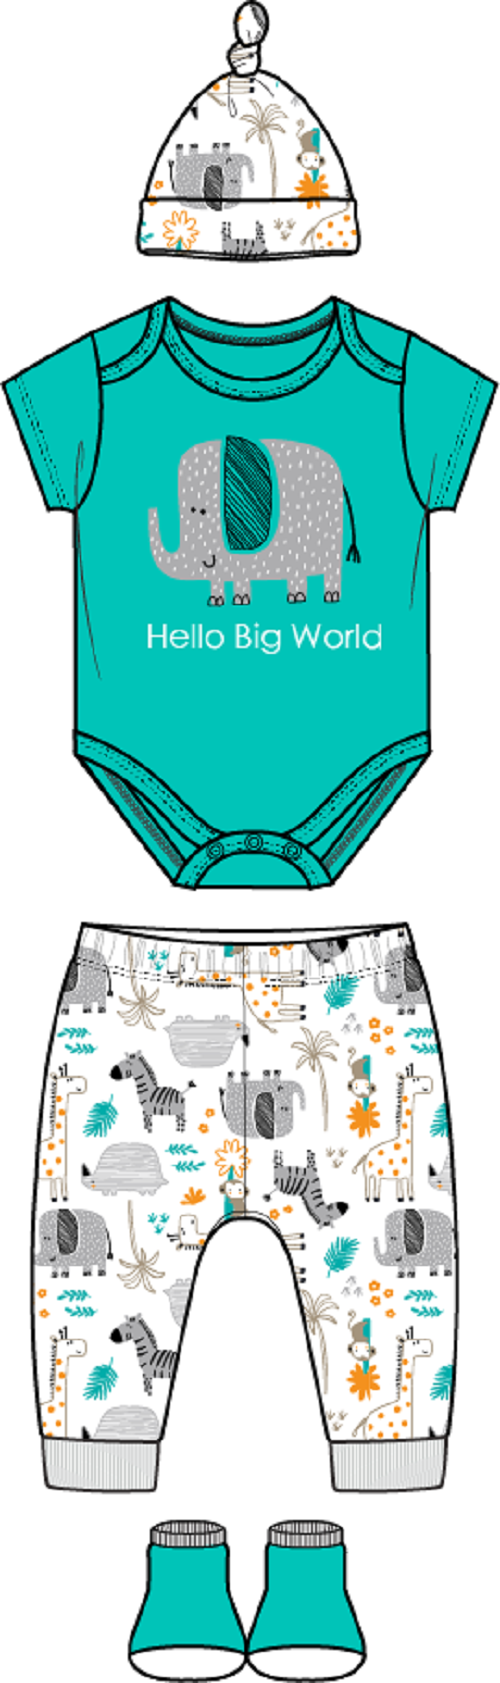 Boy’s 4pc Bodysuit set: Hello Big World